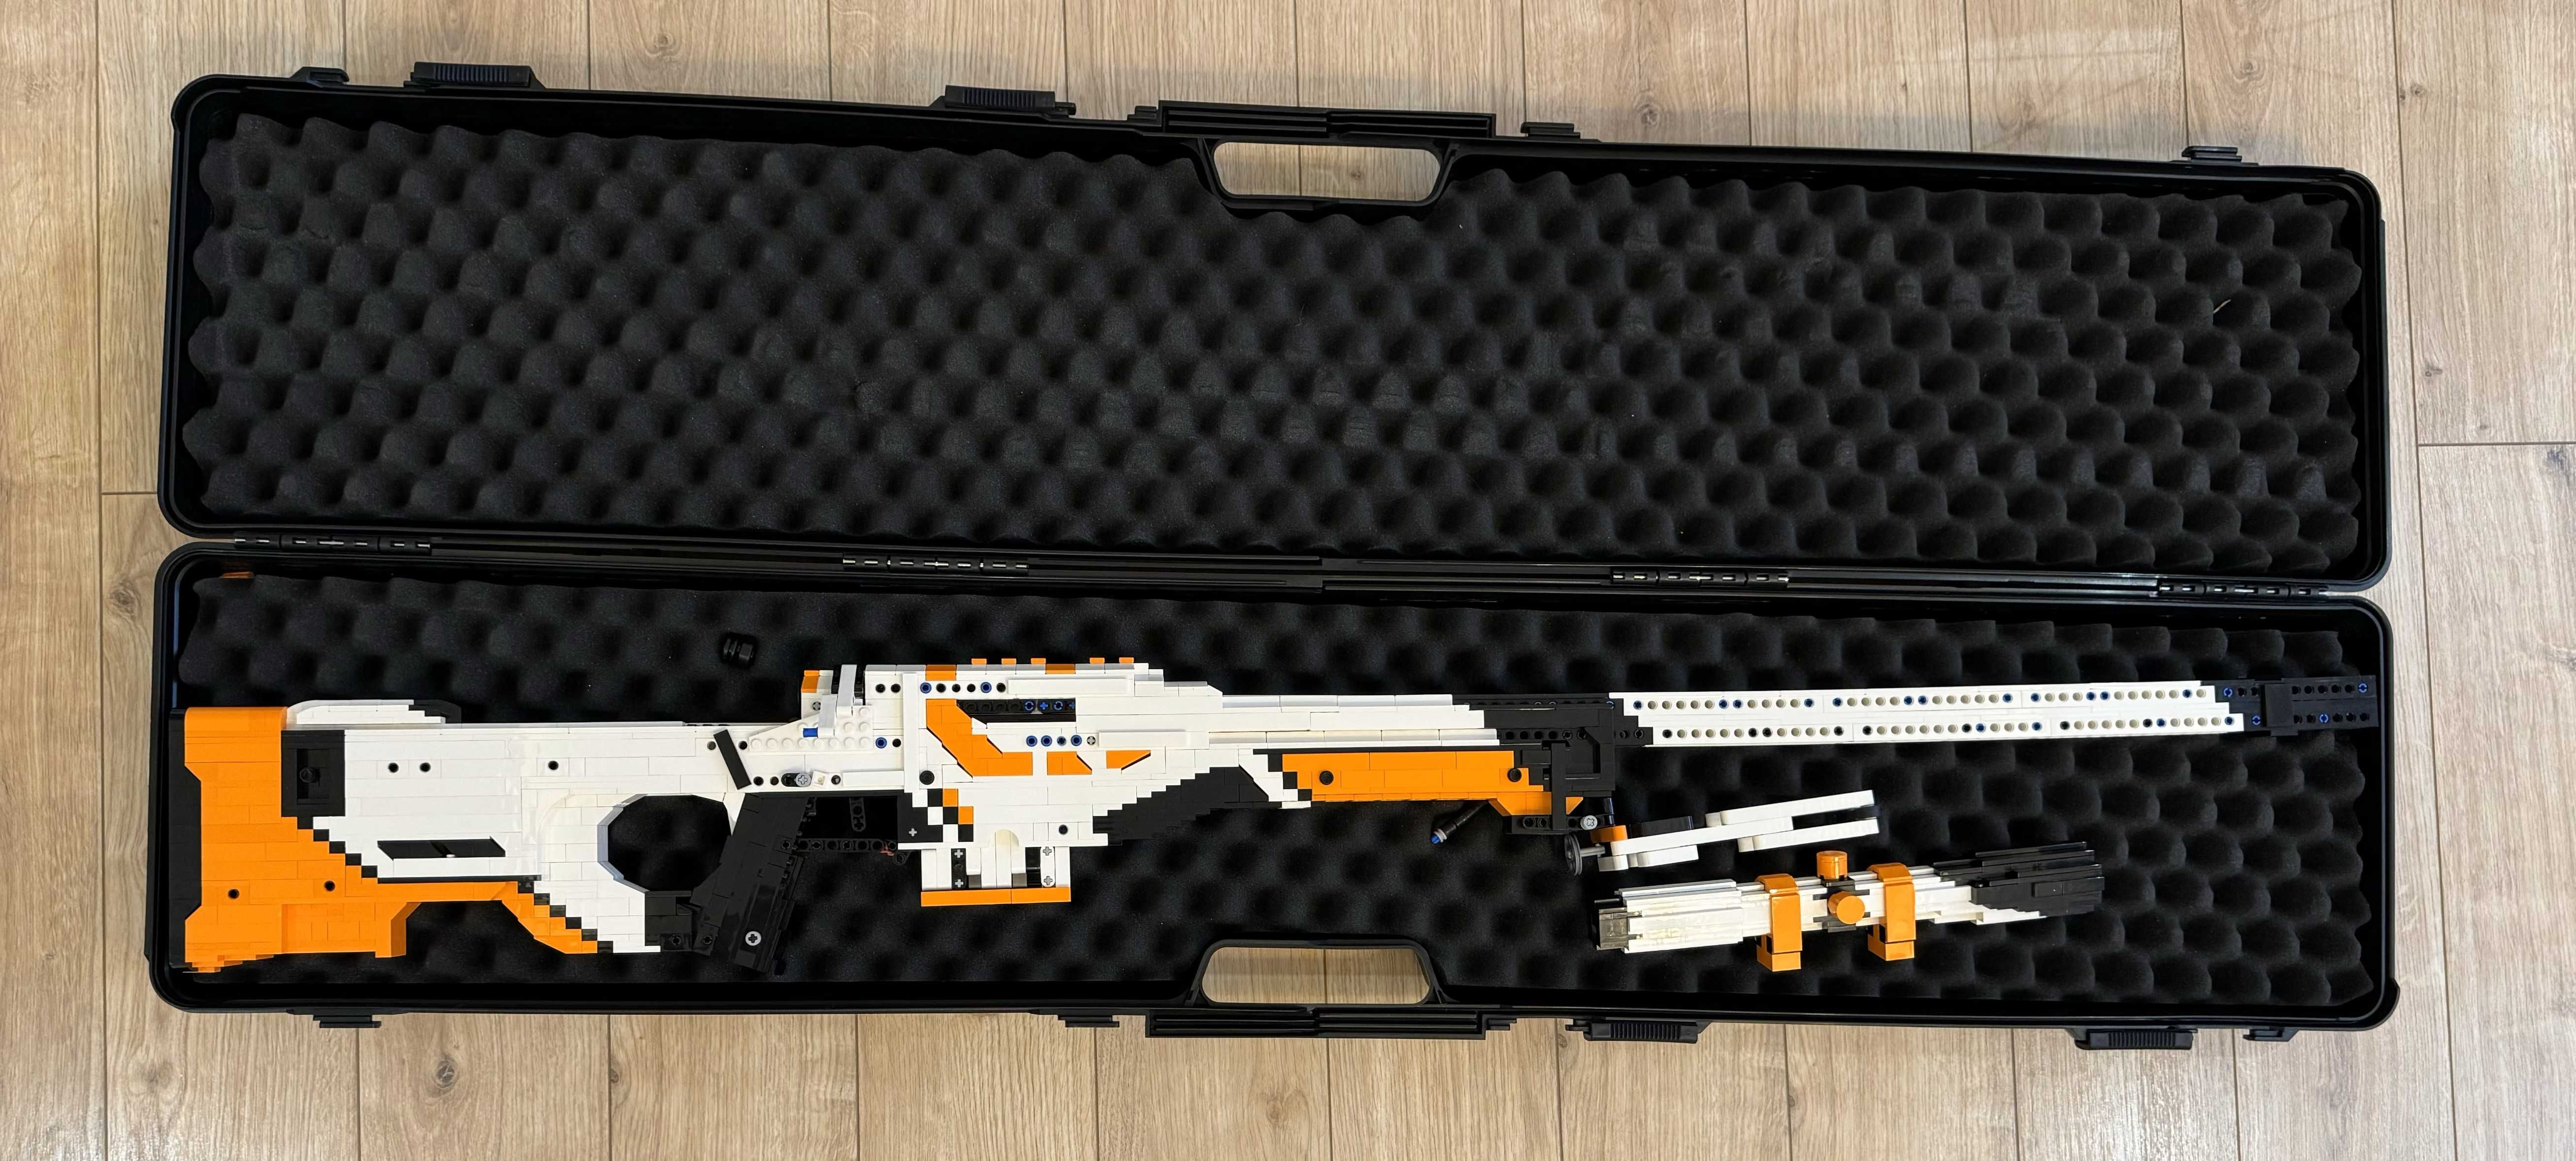 LEGO AWP Asiimov Sniper Rifle Counter Strike GO